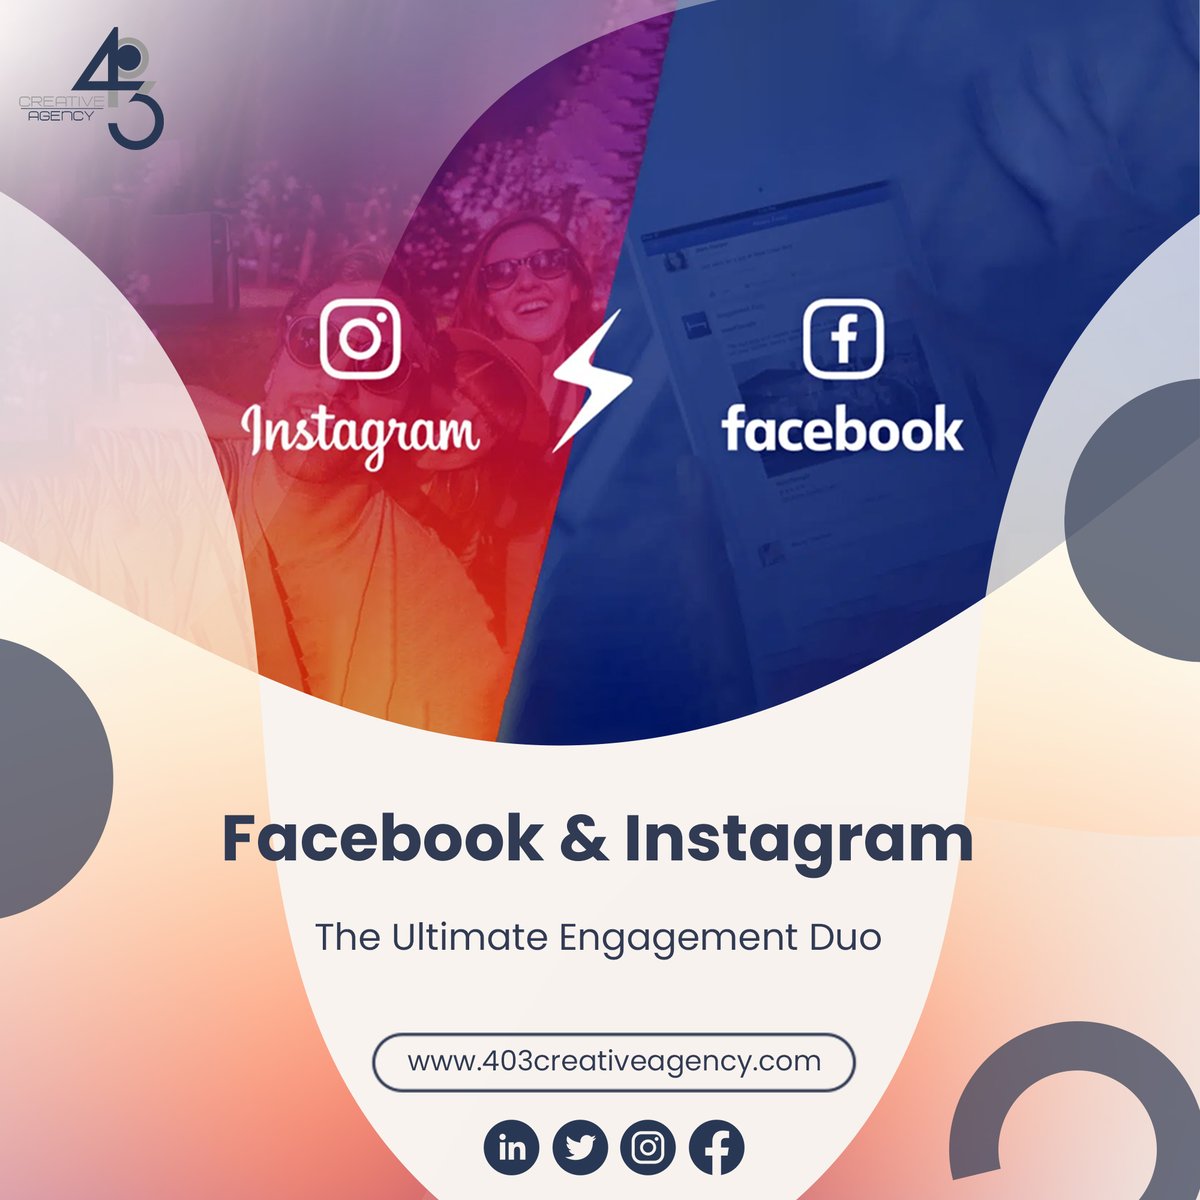 📱👥🔥 Facebook and Instagram: The Ultimate Engagement Duo! 🔥👥📱

📧 info@403creativeagency.com
🤙 (404) 220-9967

#SocialMediaContentTips #ContentStrategy #USAMarketing #DigitalMarketingUSA #SocialMediaSuccess #USAEntrepreneurs #ContentCreation #USBusinessBoost #SocialMedia